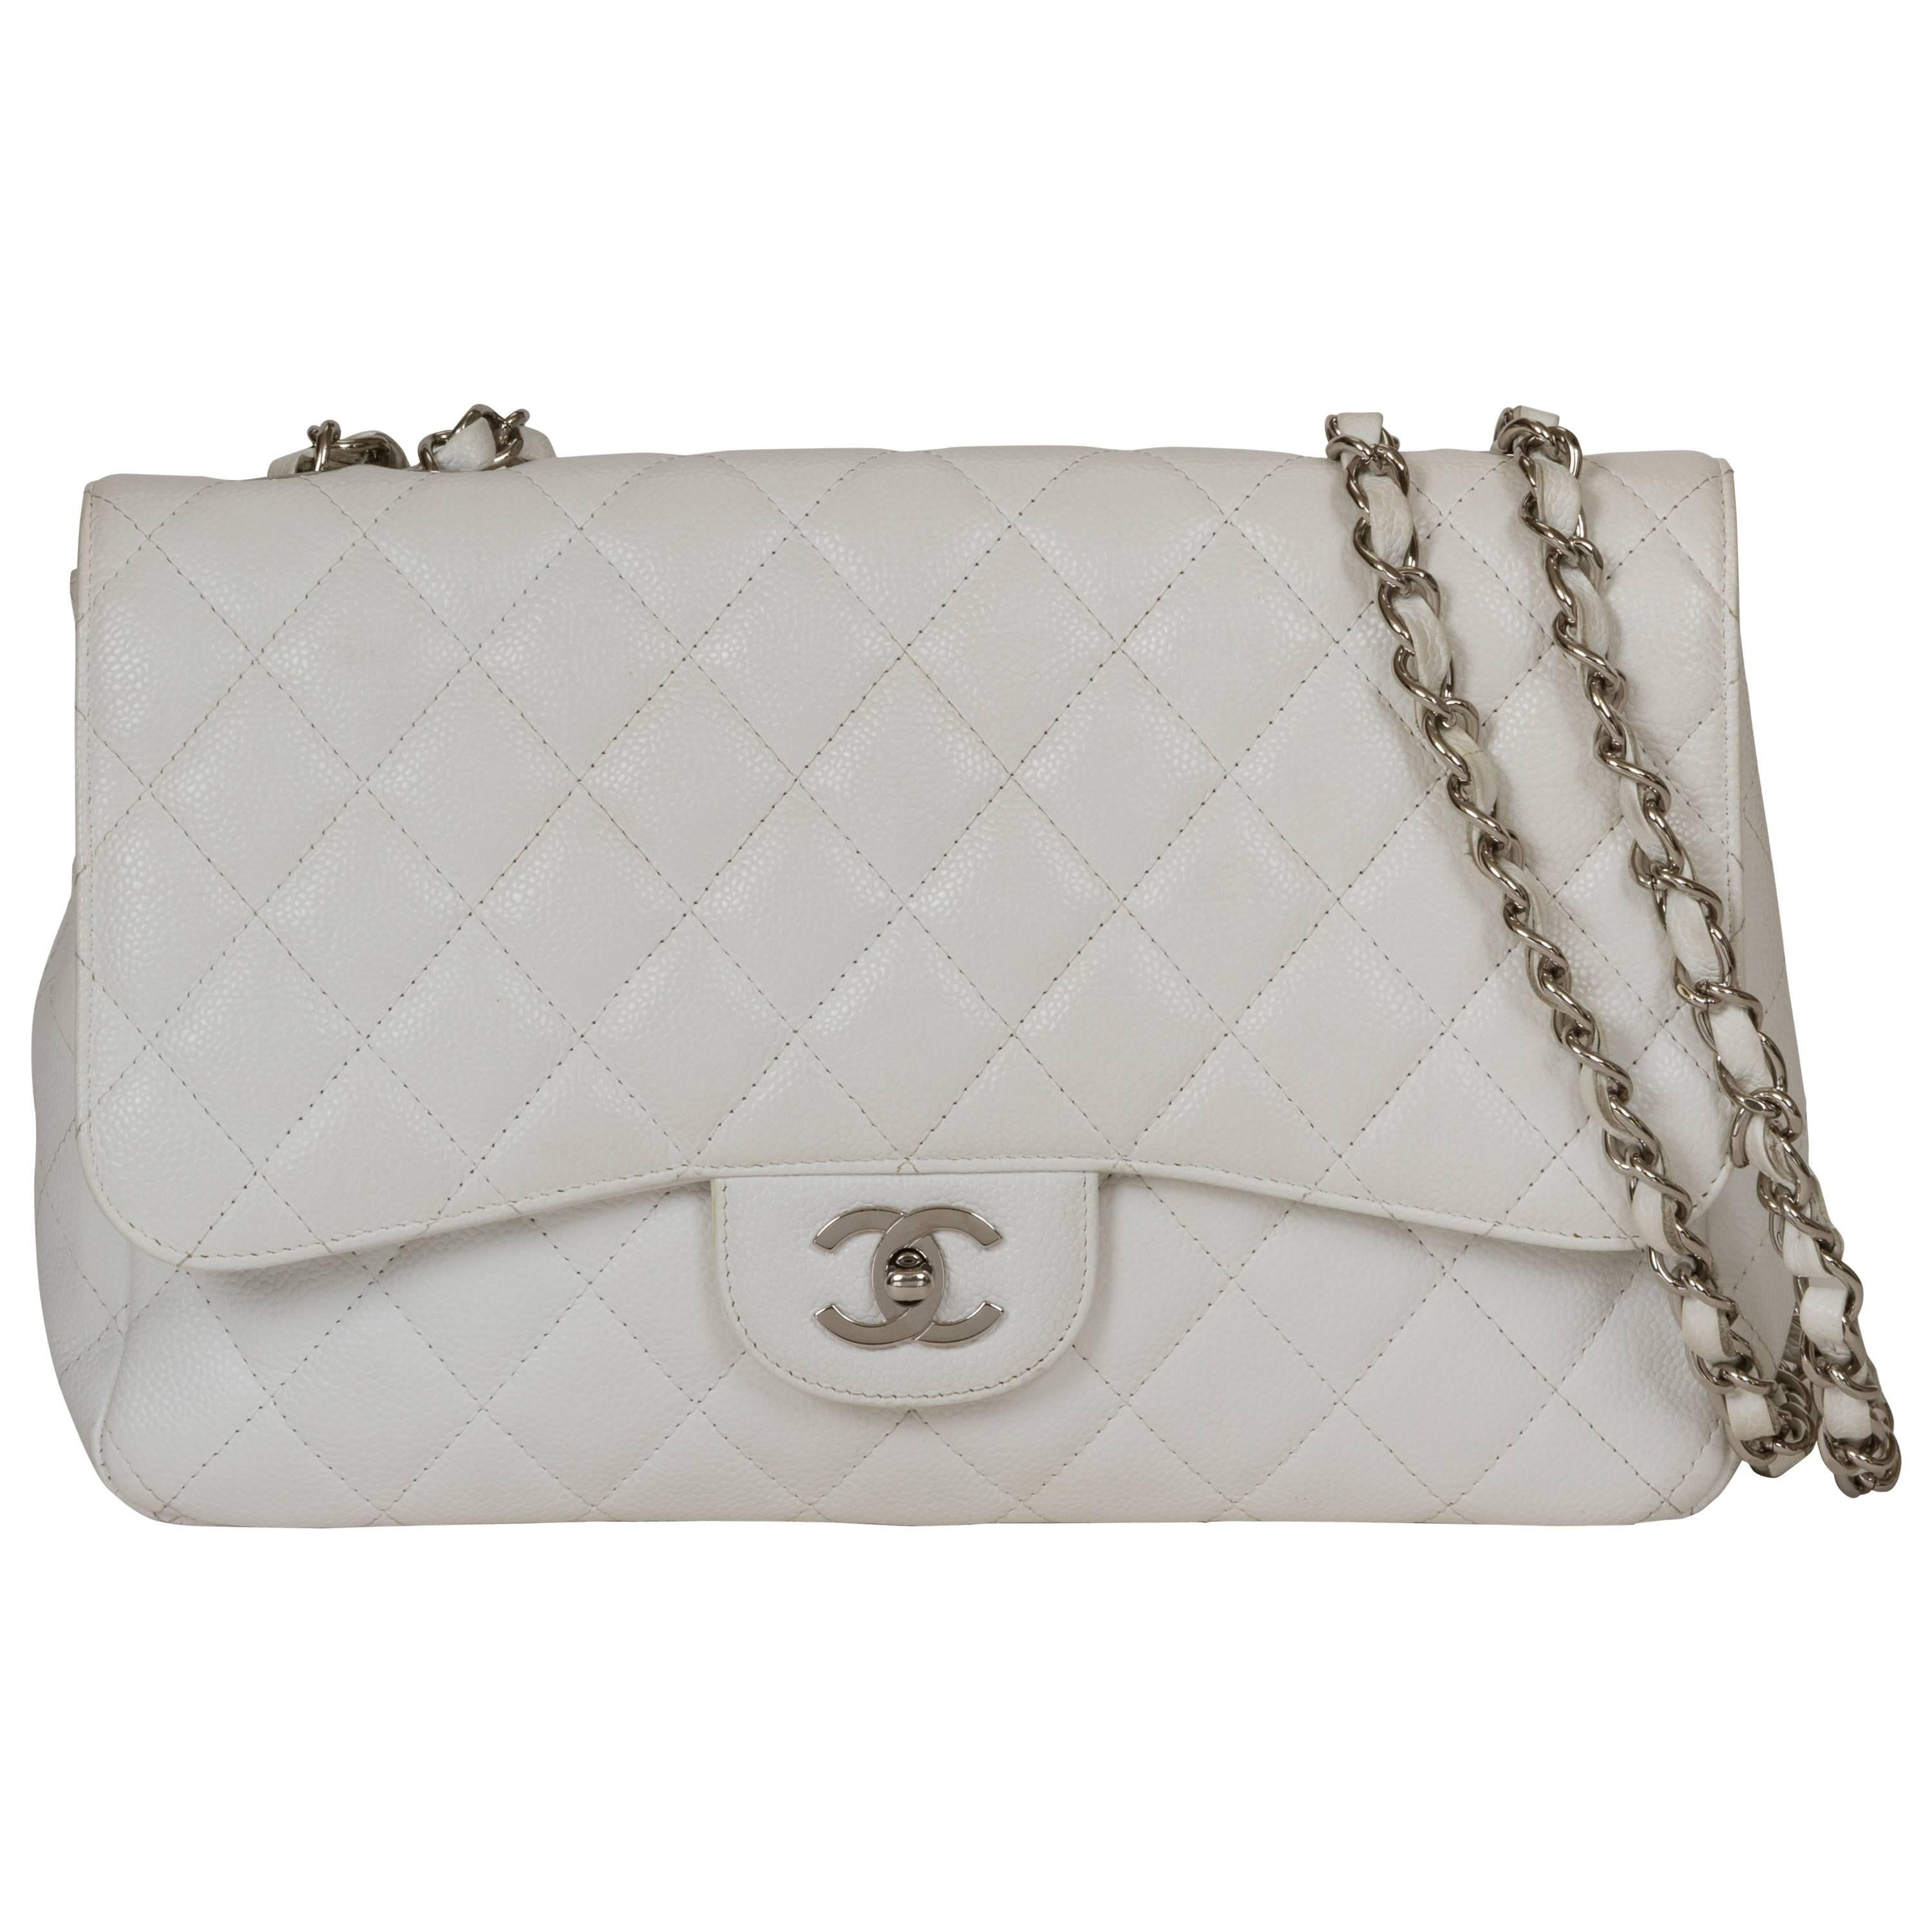 Chanel White Caviar Jumbo Single Flap Bag